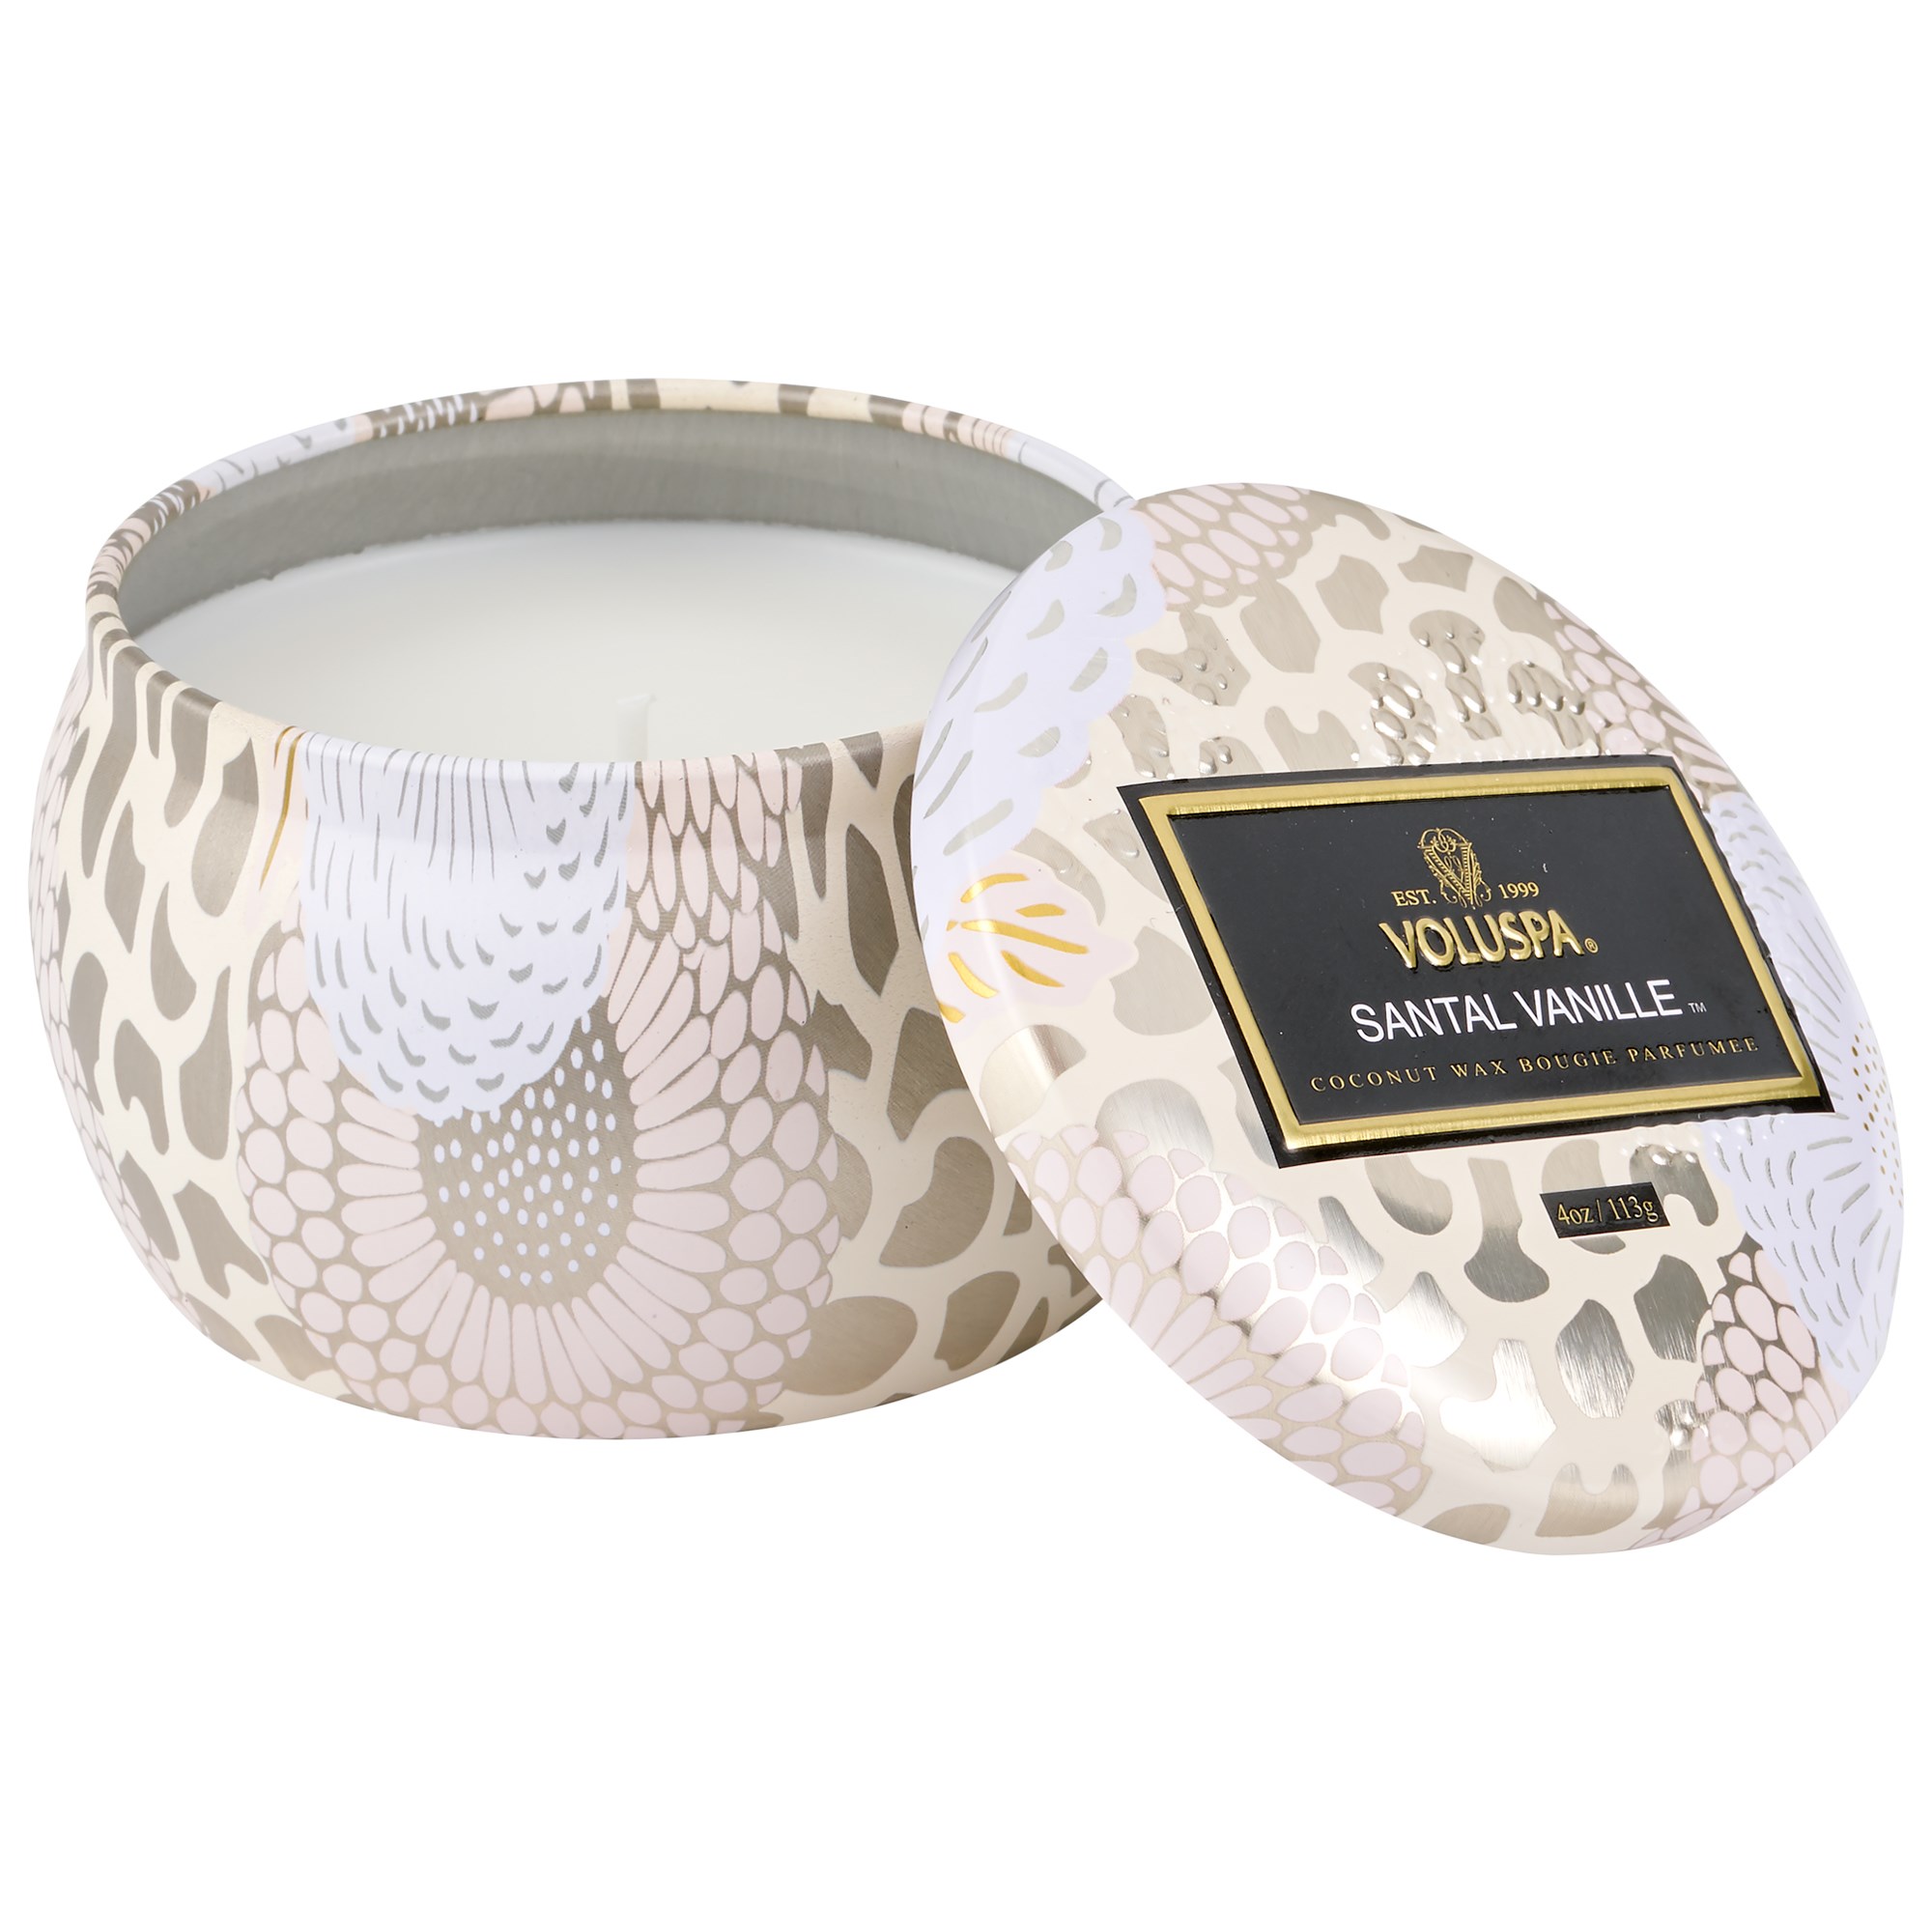 Voluspa Santal Vanille Japonica Decorative Tin Candle